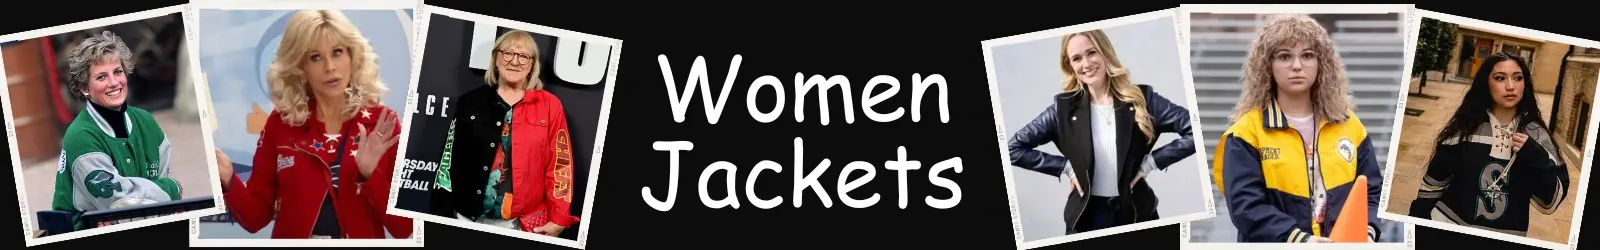 Women Jackets Category Banner